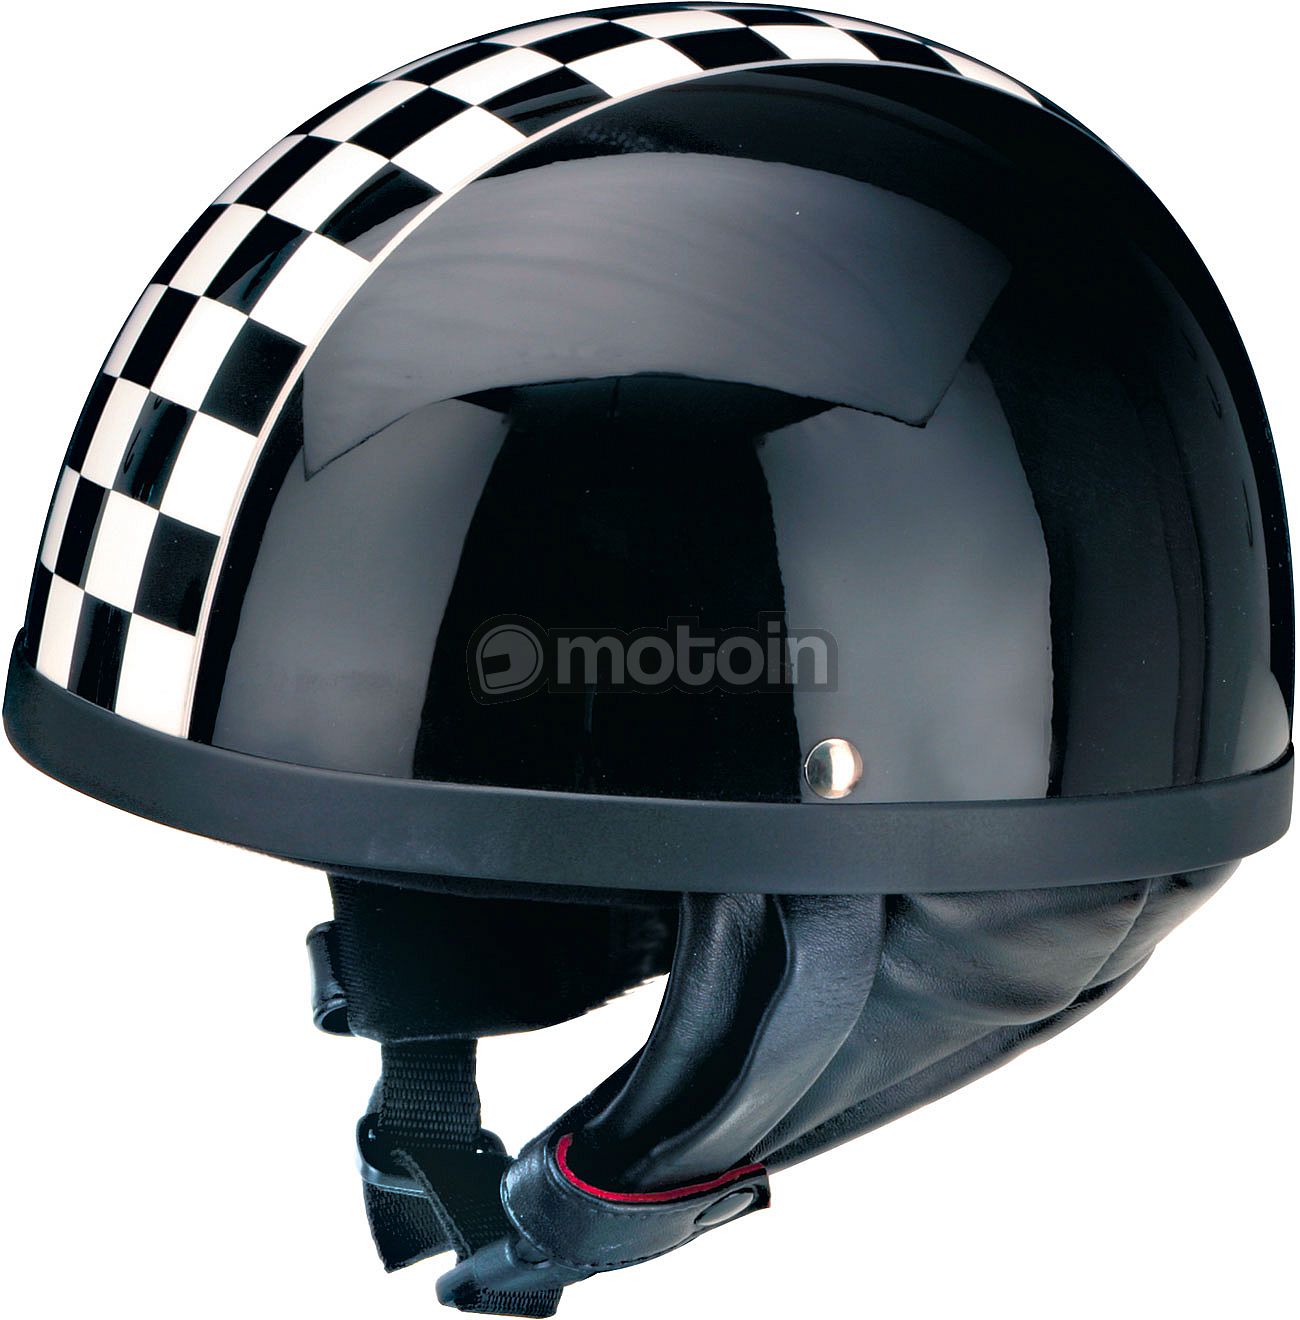 Redbike RB-511 TT, open face helmet